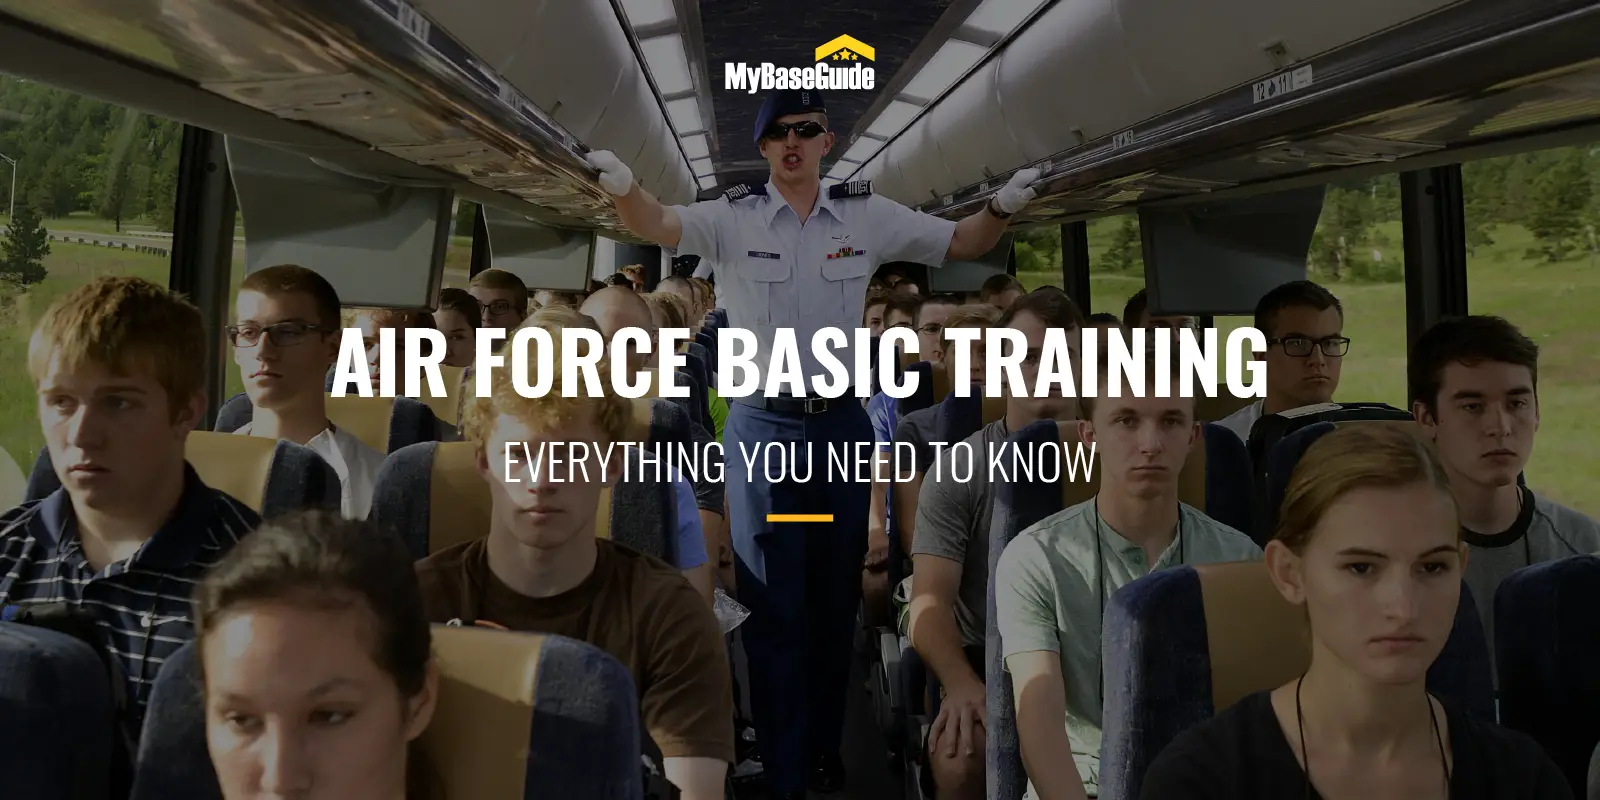 Preparing for Air Force Basic Training - Checklist